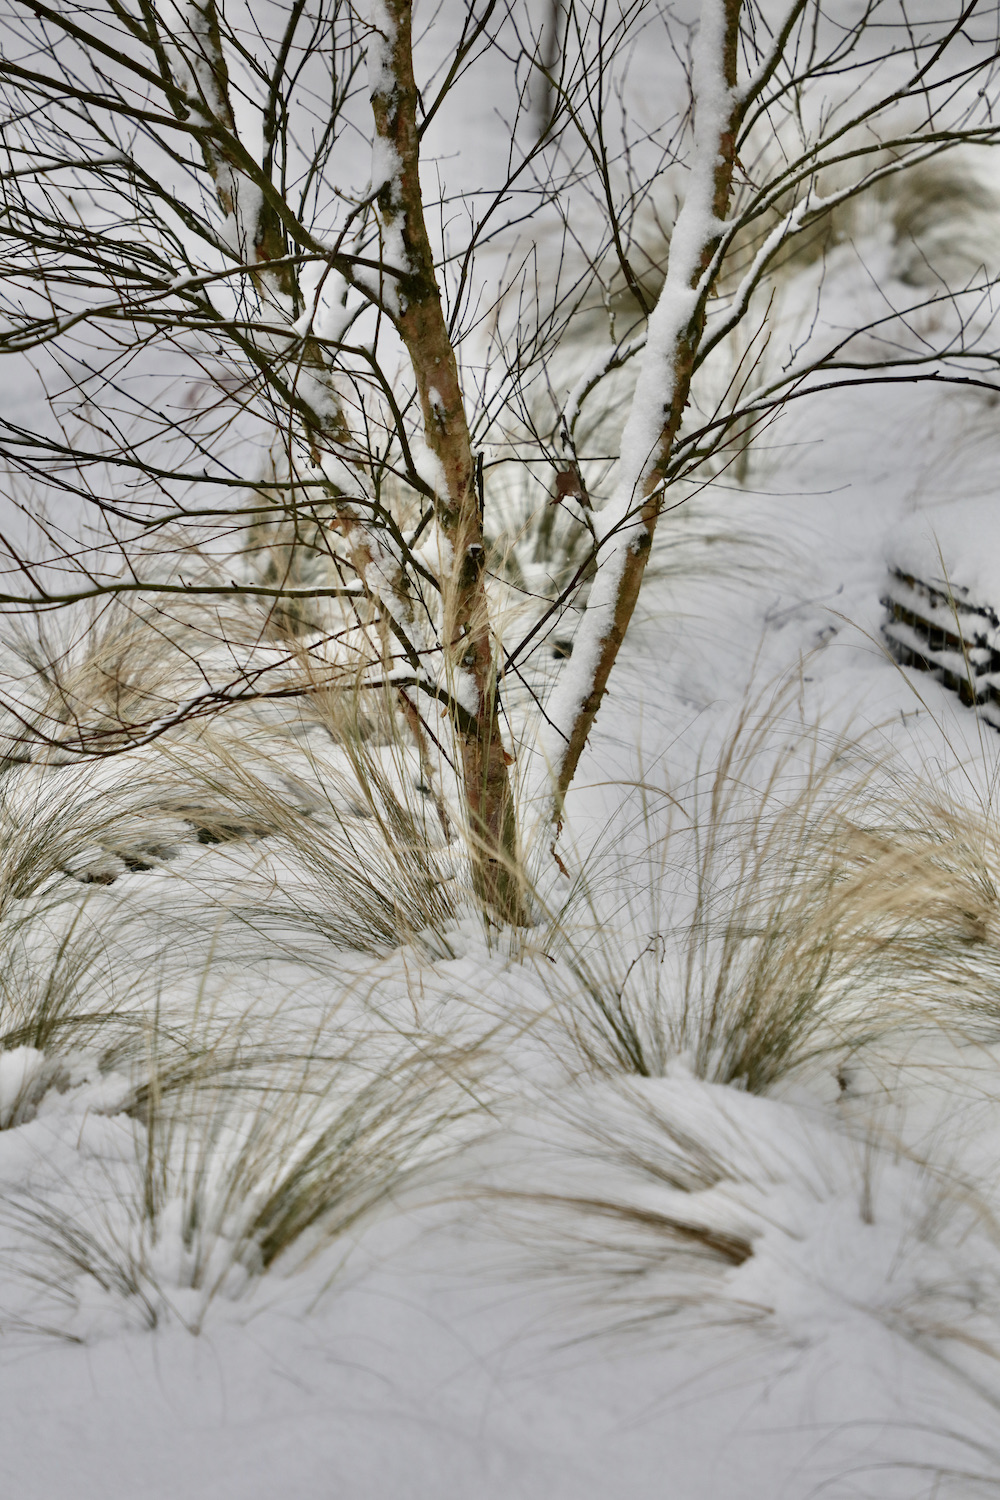 Snow fallen amongst grasses in winter. Designed by Hendy Curzon Gardens